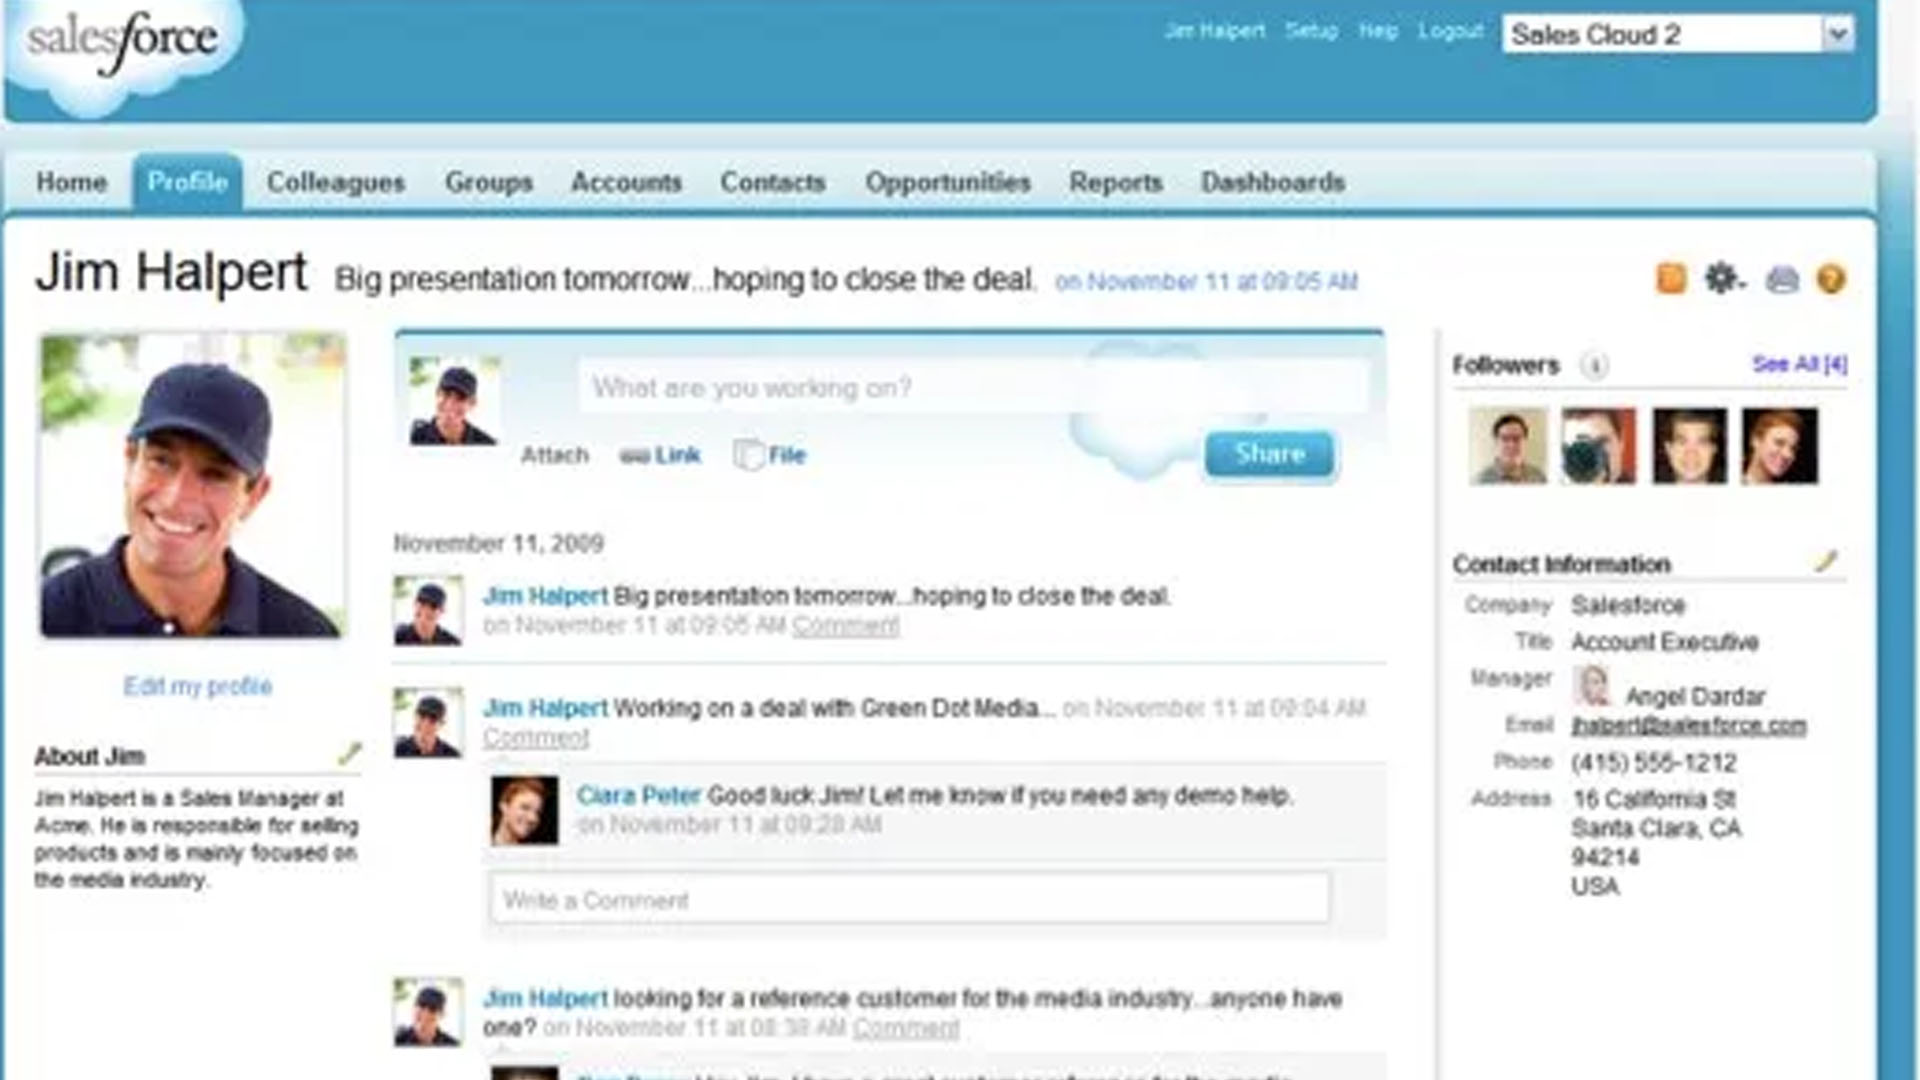 Salesforce's internal social media network for employees.